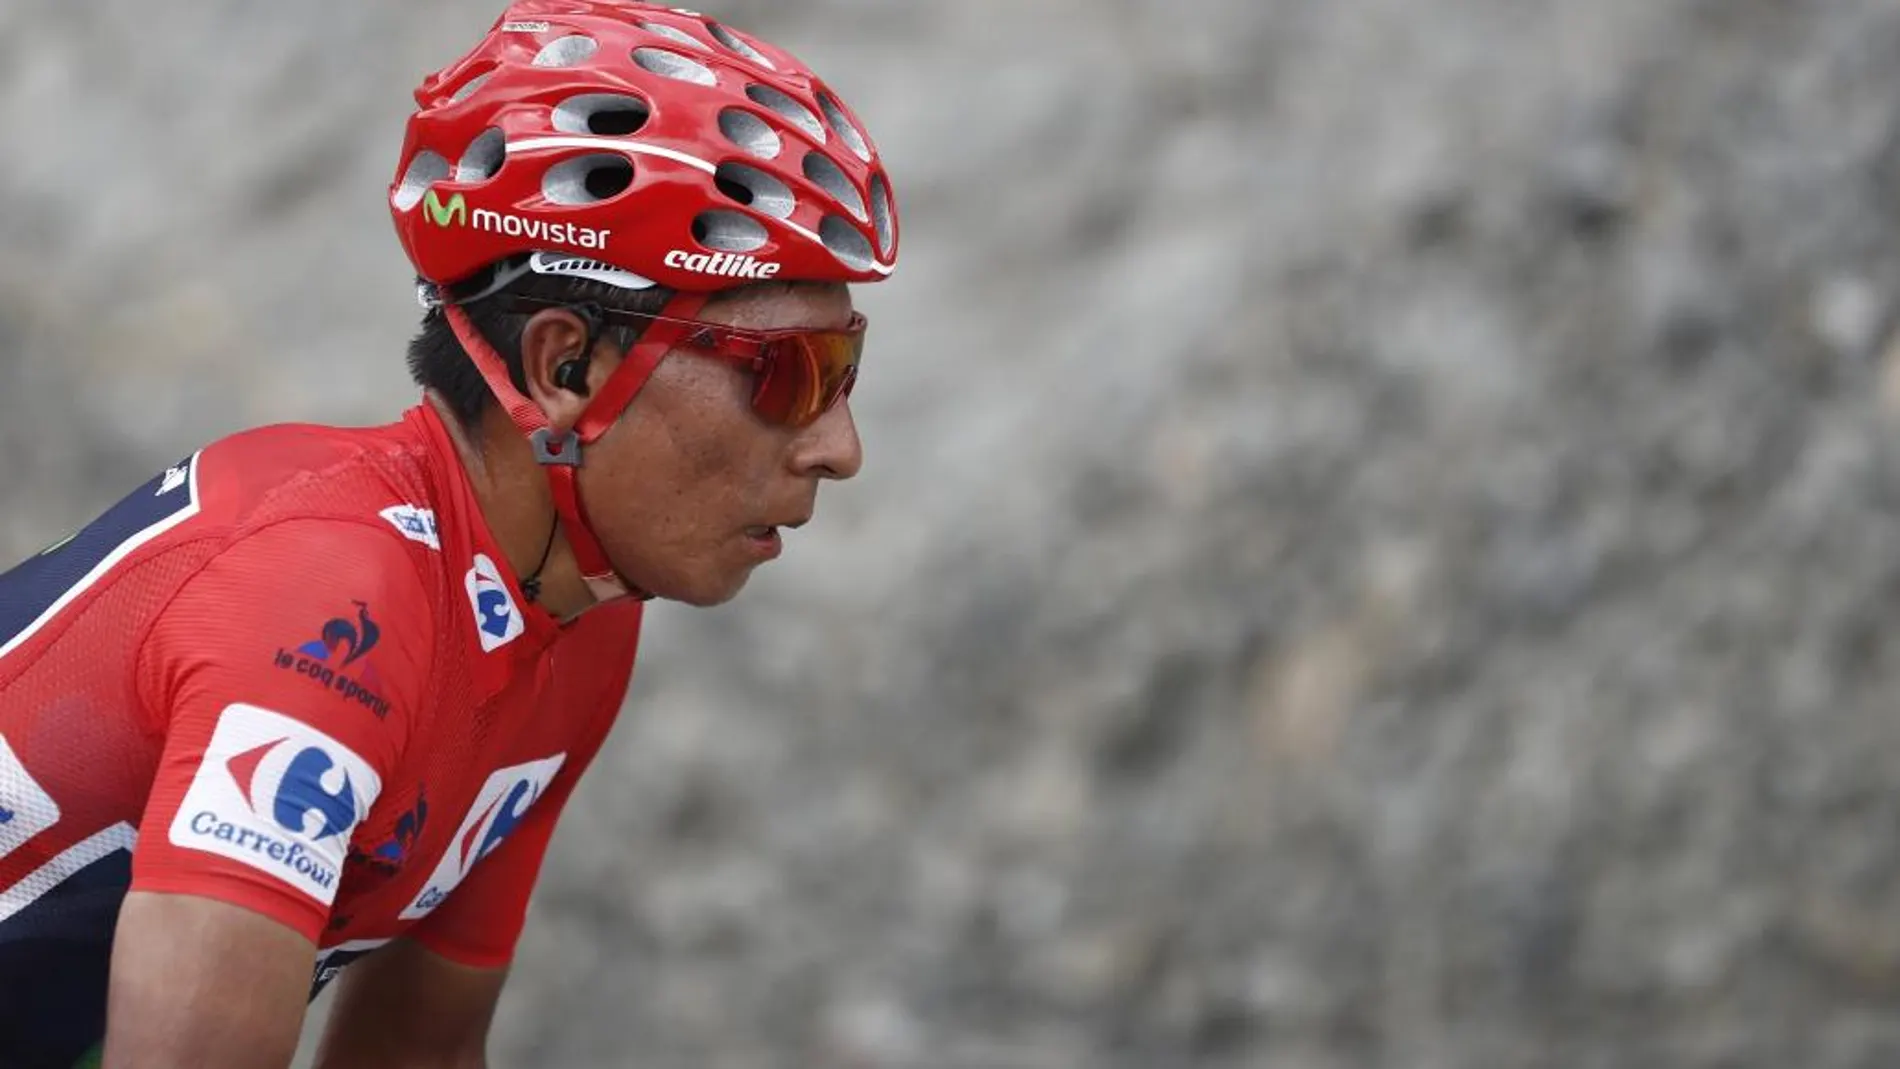 Nairo Quintana, en la etapa de Formigal en la Vuelta de 2016